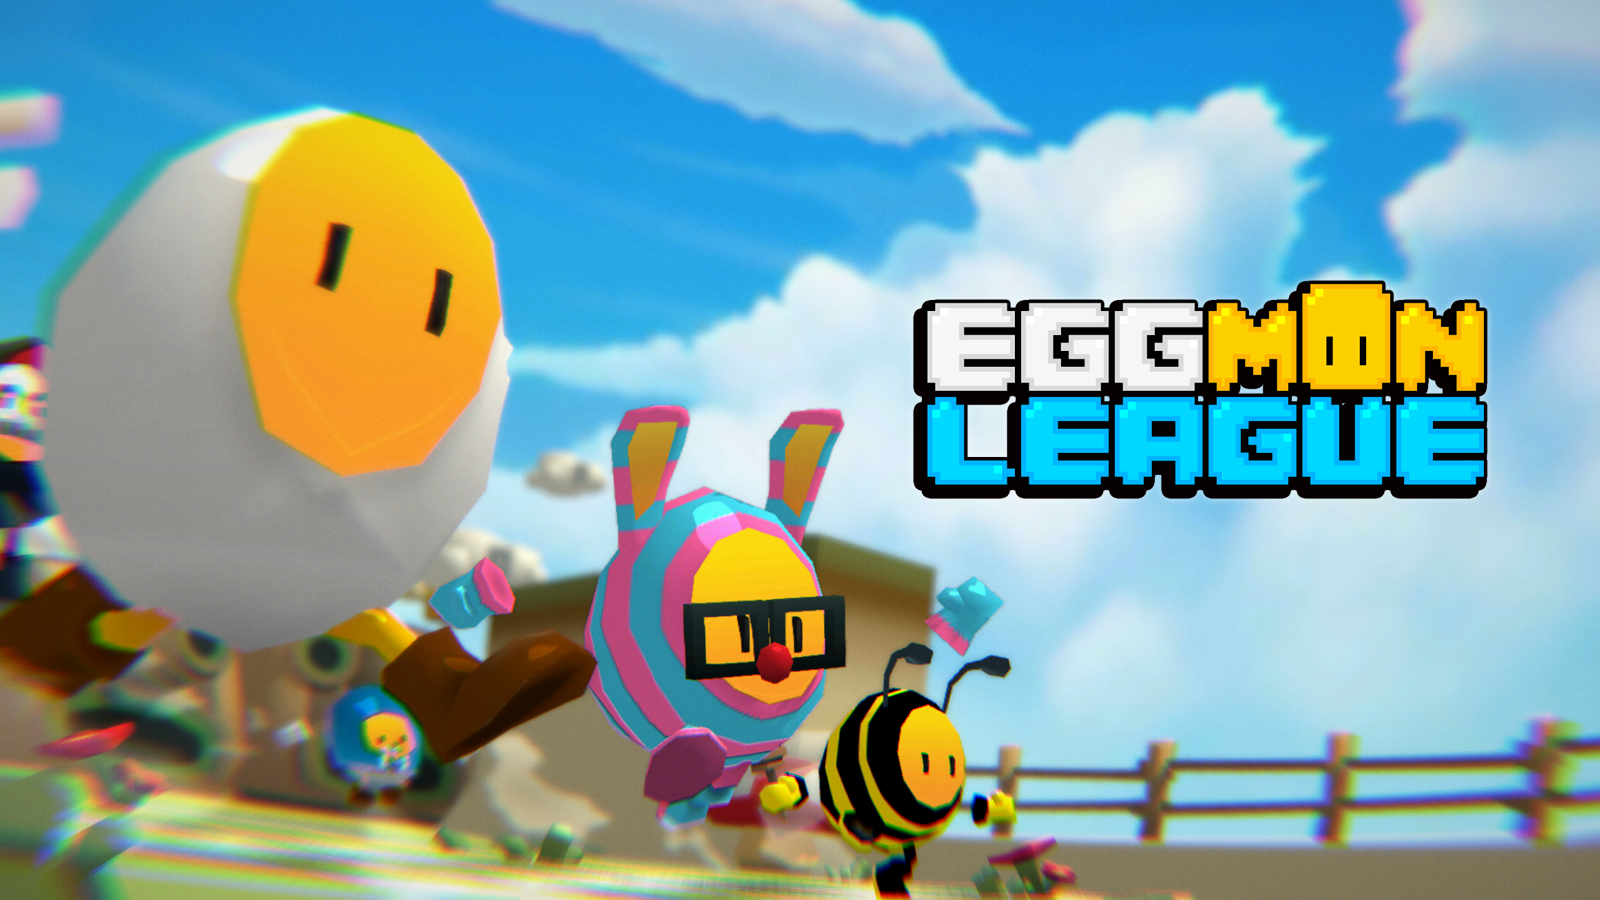 Screenshot 1 of giải đấu trứng 